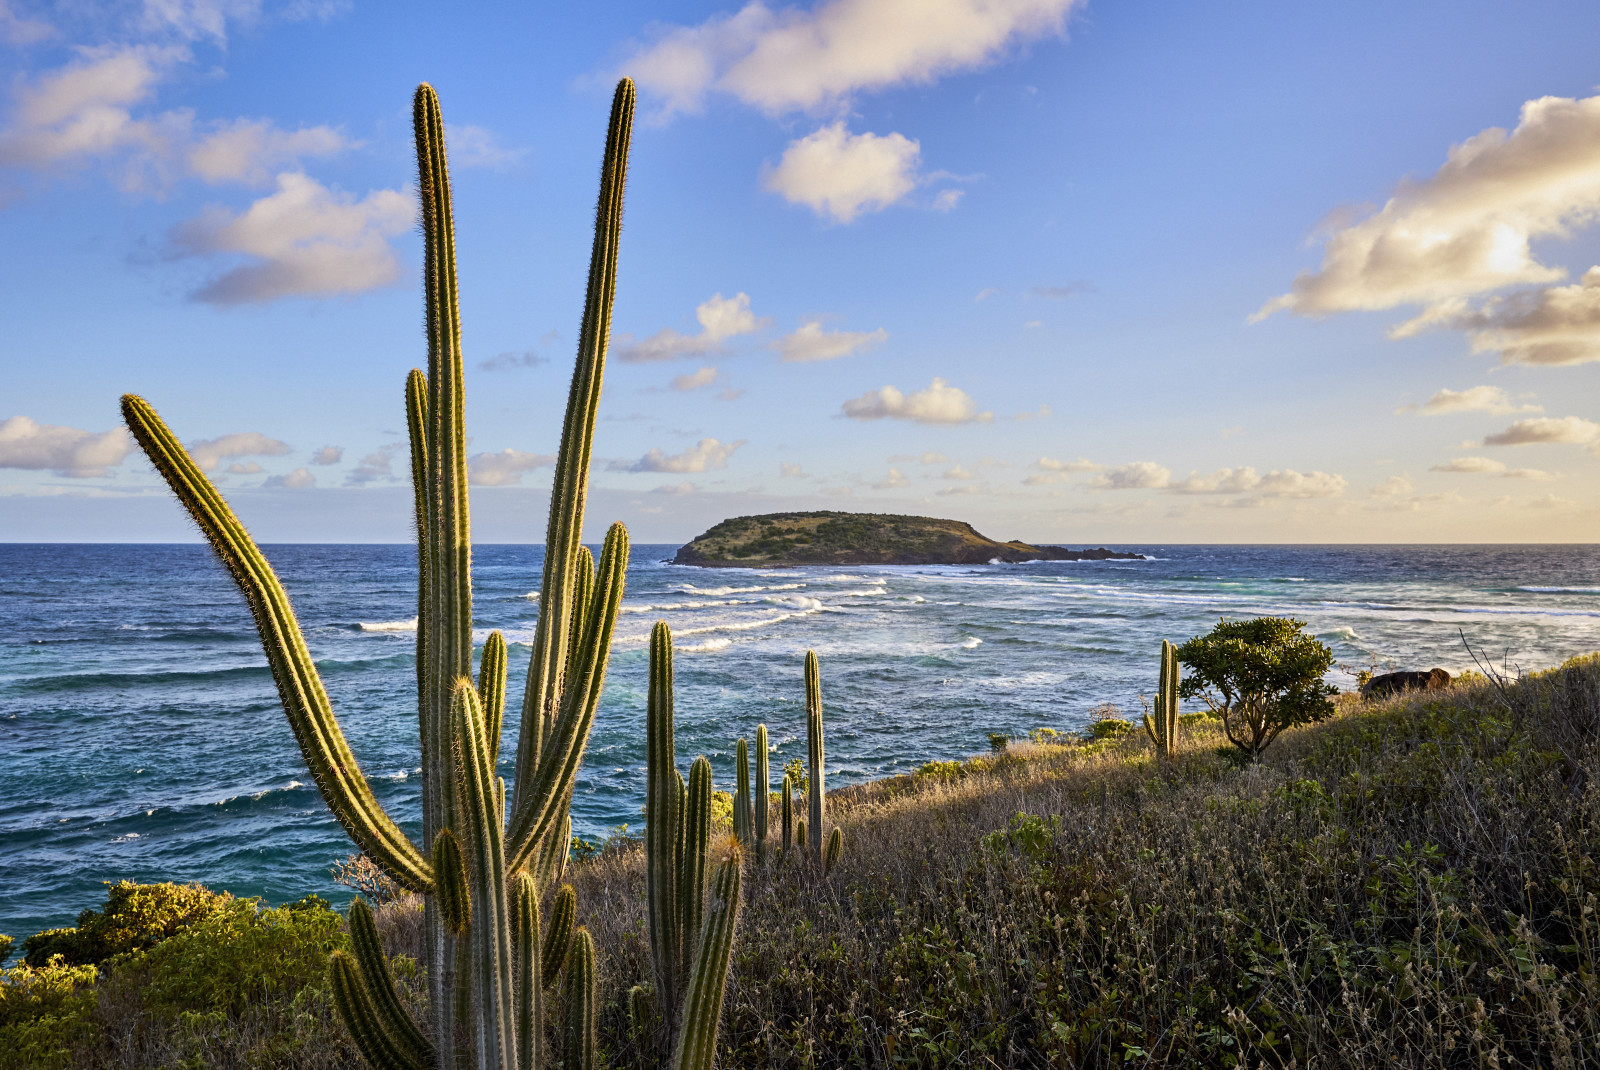 cacti overlooking ocean during daytime